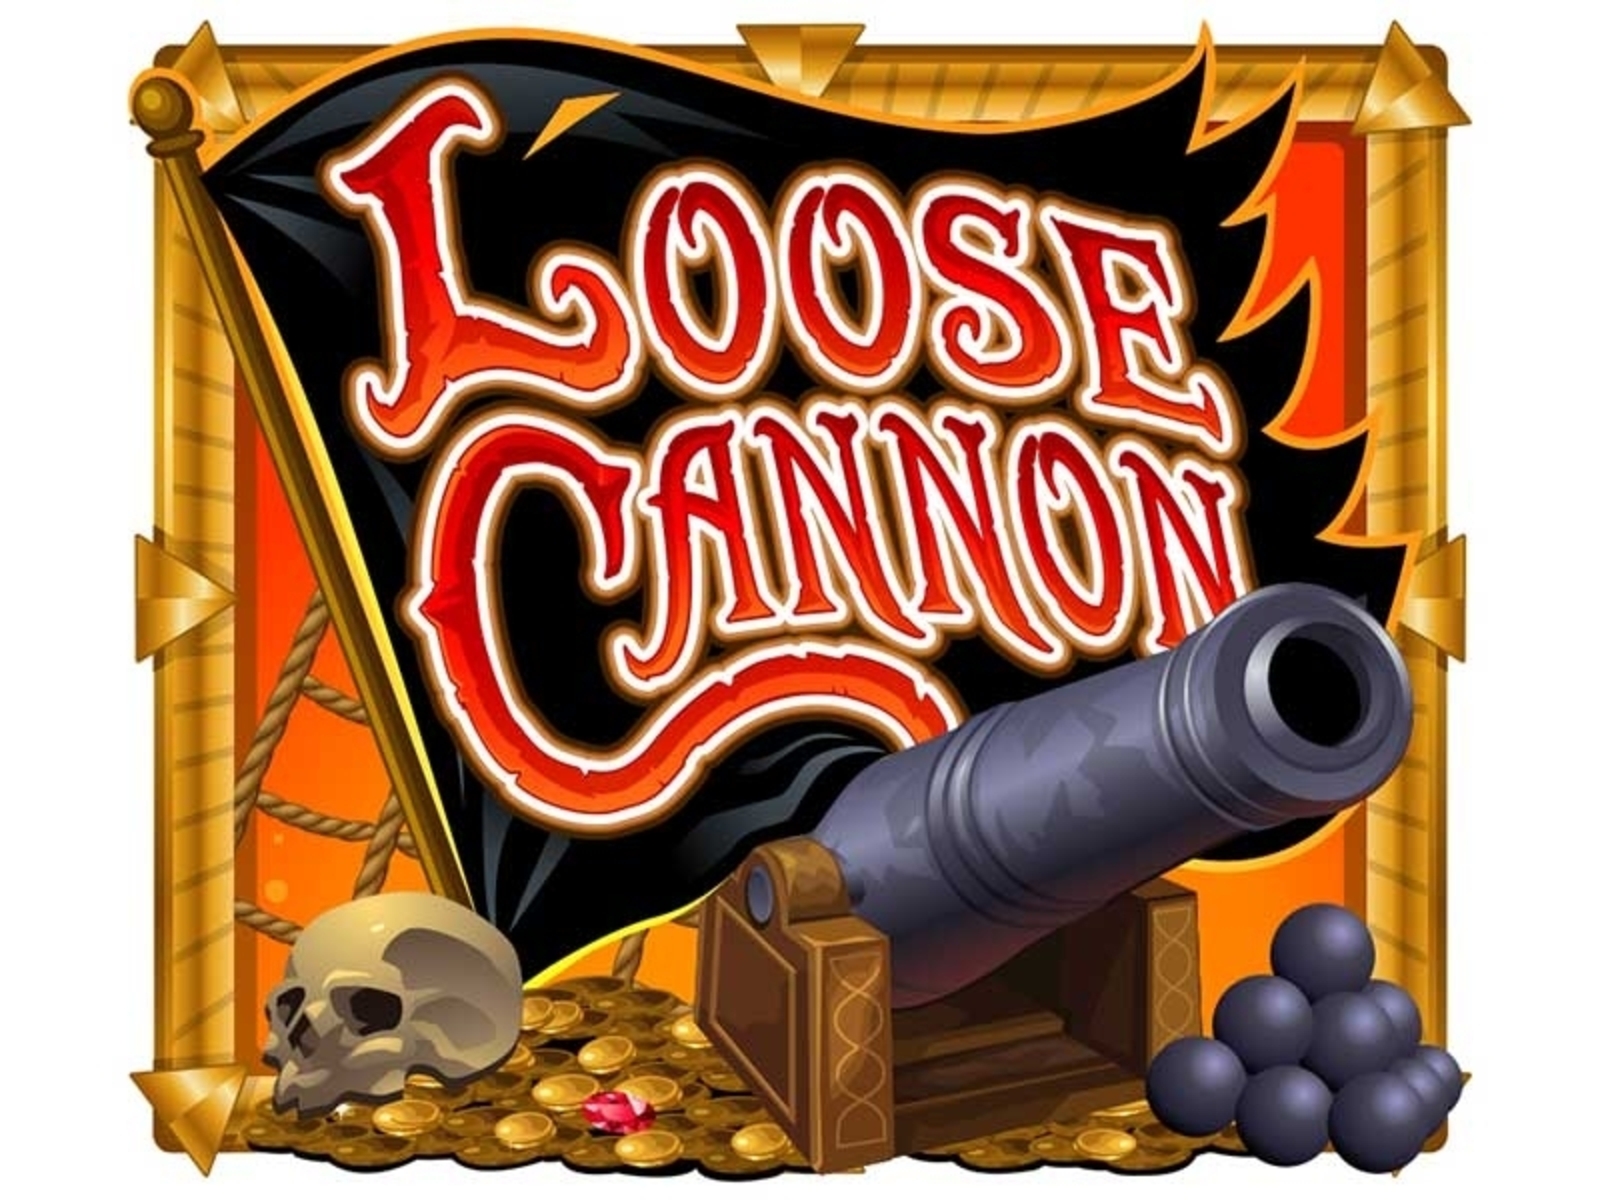 Loose Cannon demo